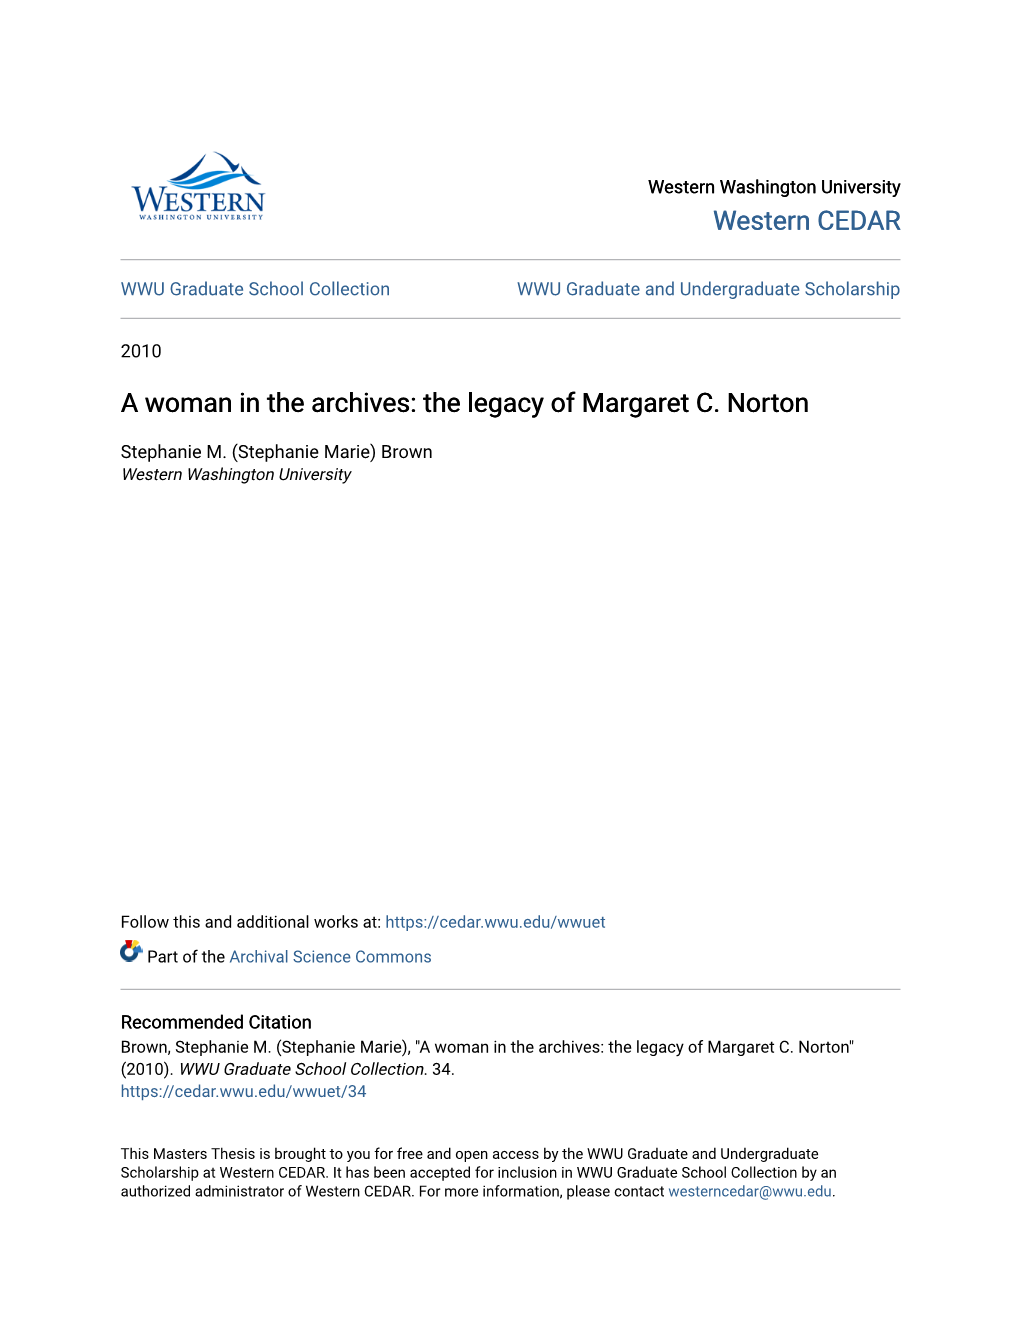 The Legacy of Margaret C. Norton